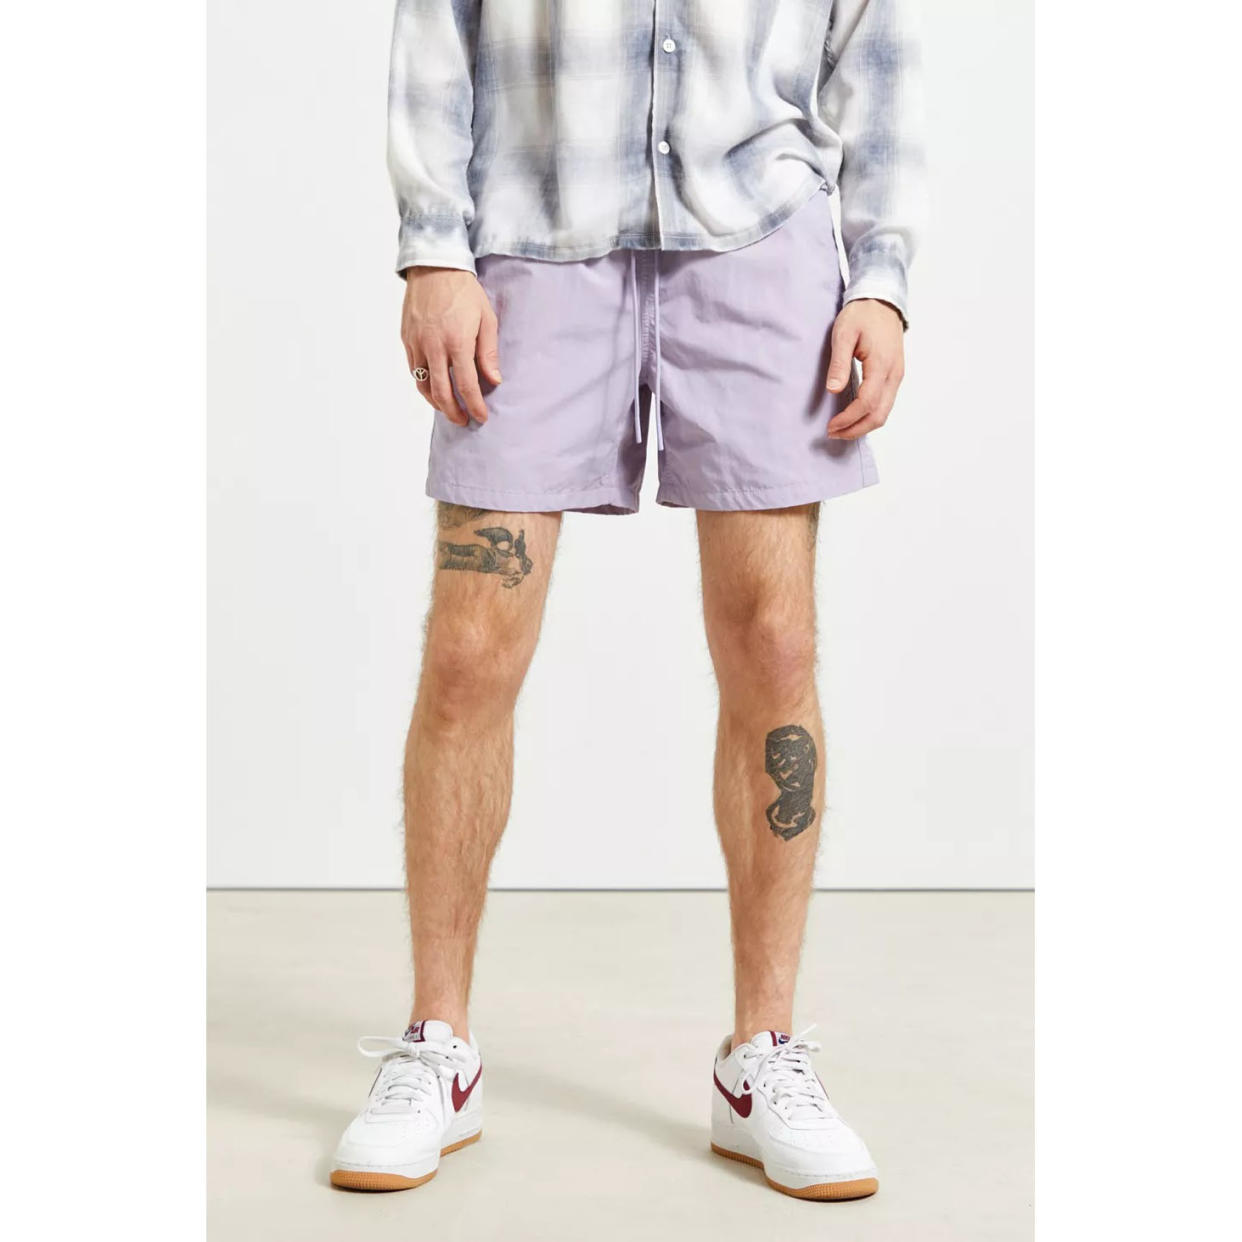 Standard Cloth Oliver Nylon Short, best water shorts for men